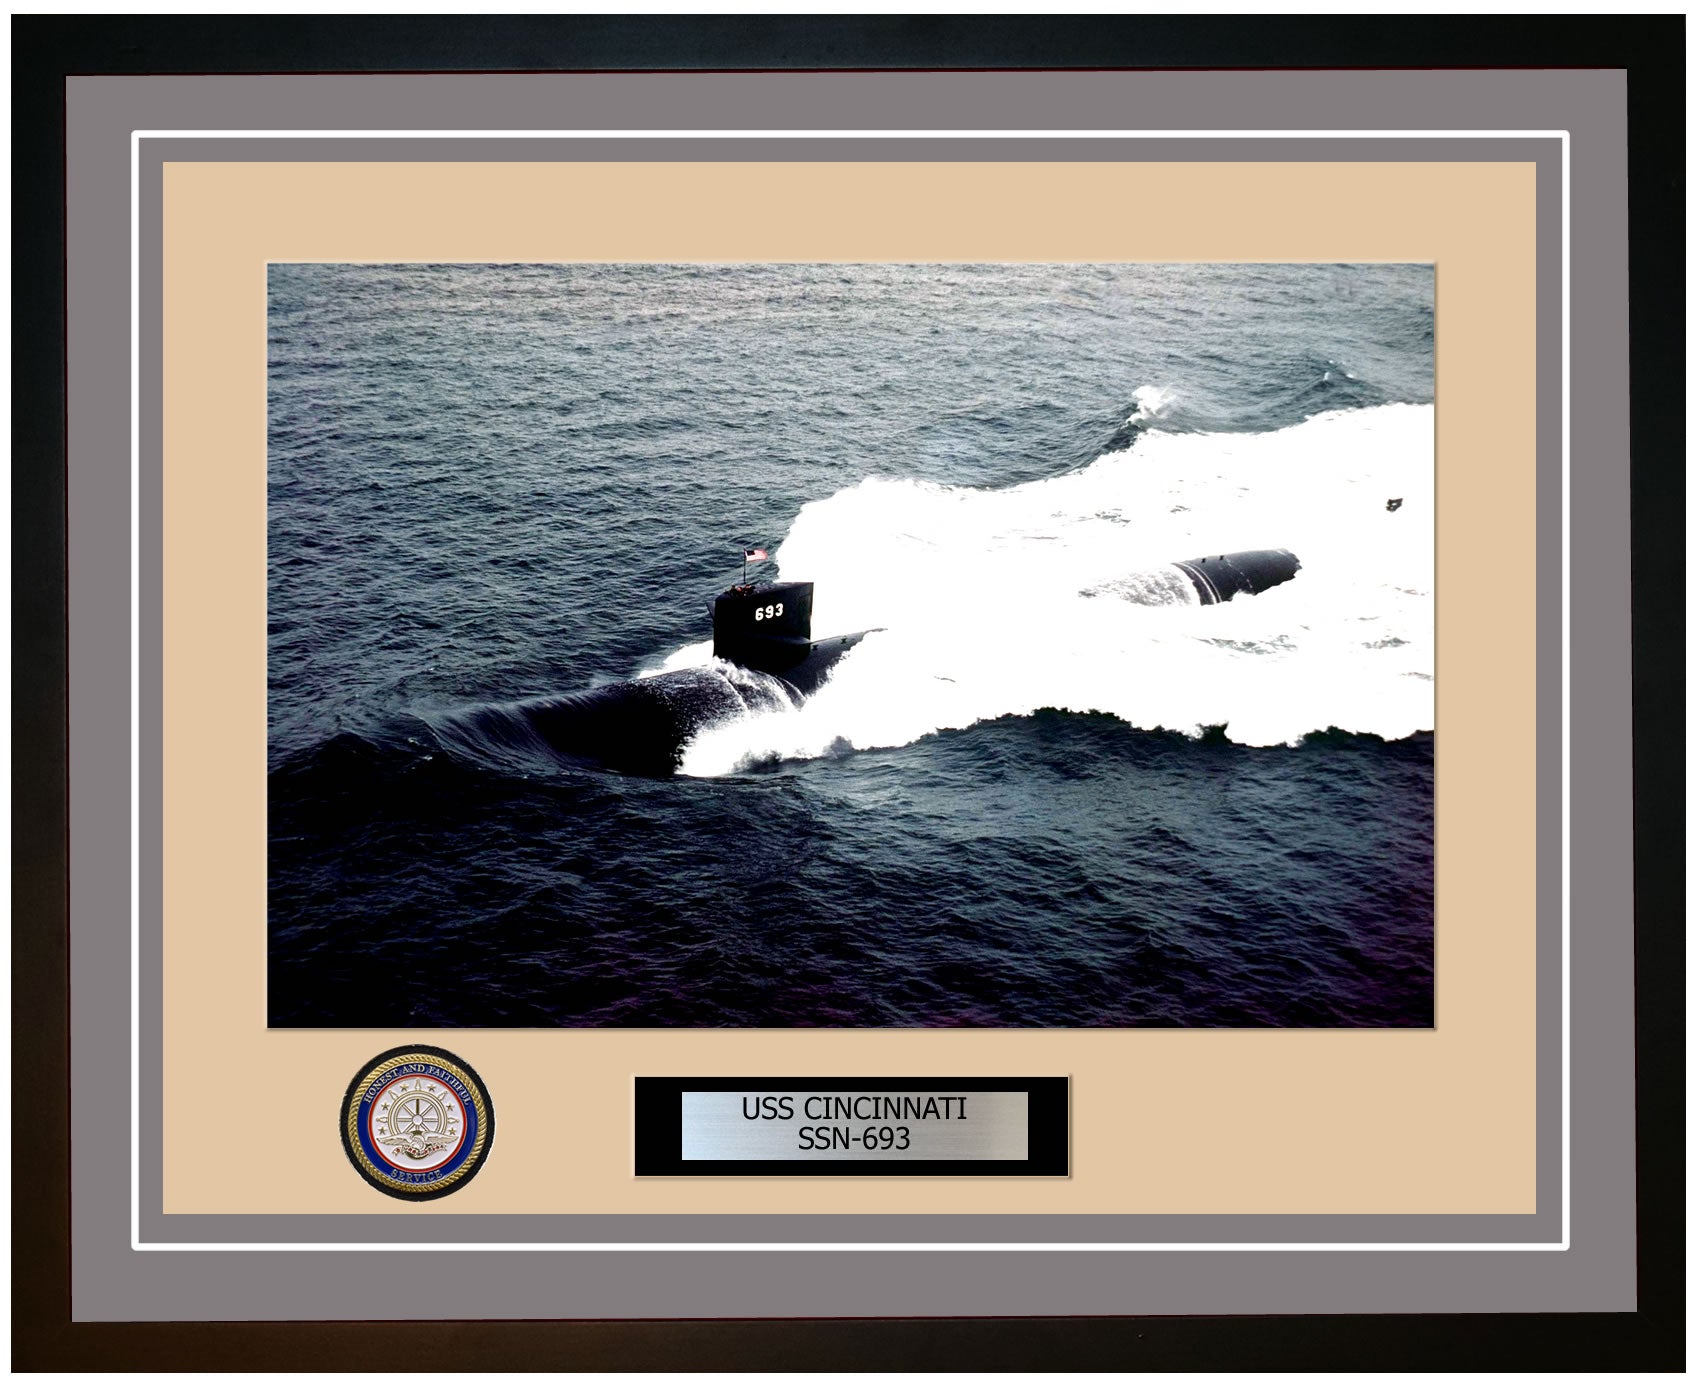 USS Cincinnati SSN-693 Framed Navy Ship Photo Grey